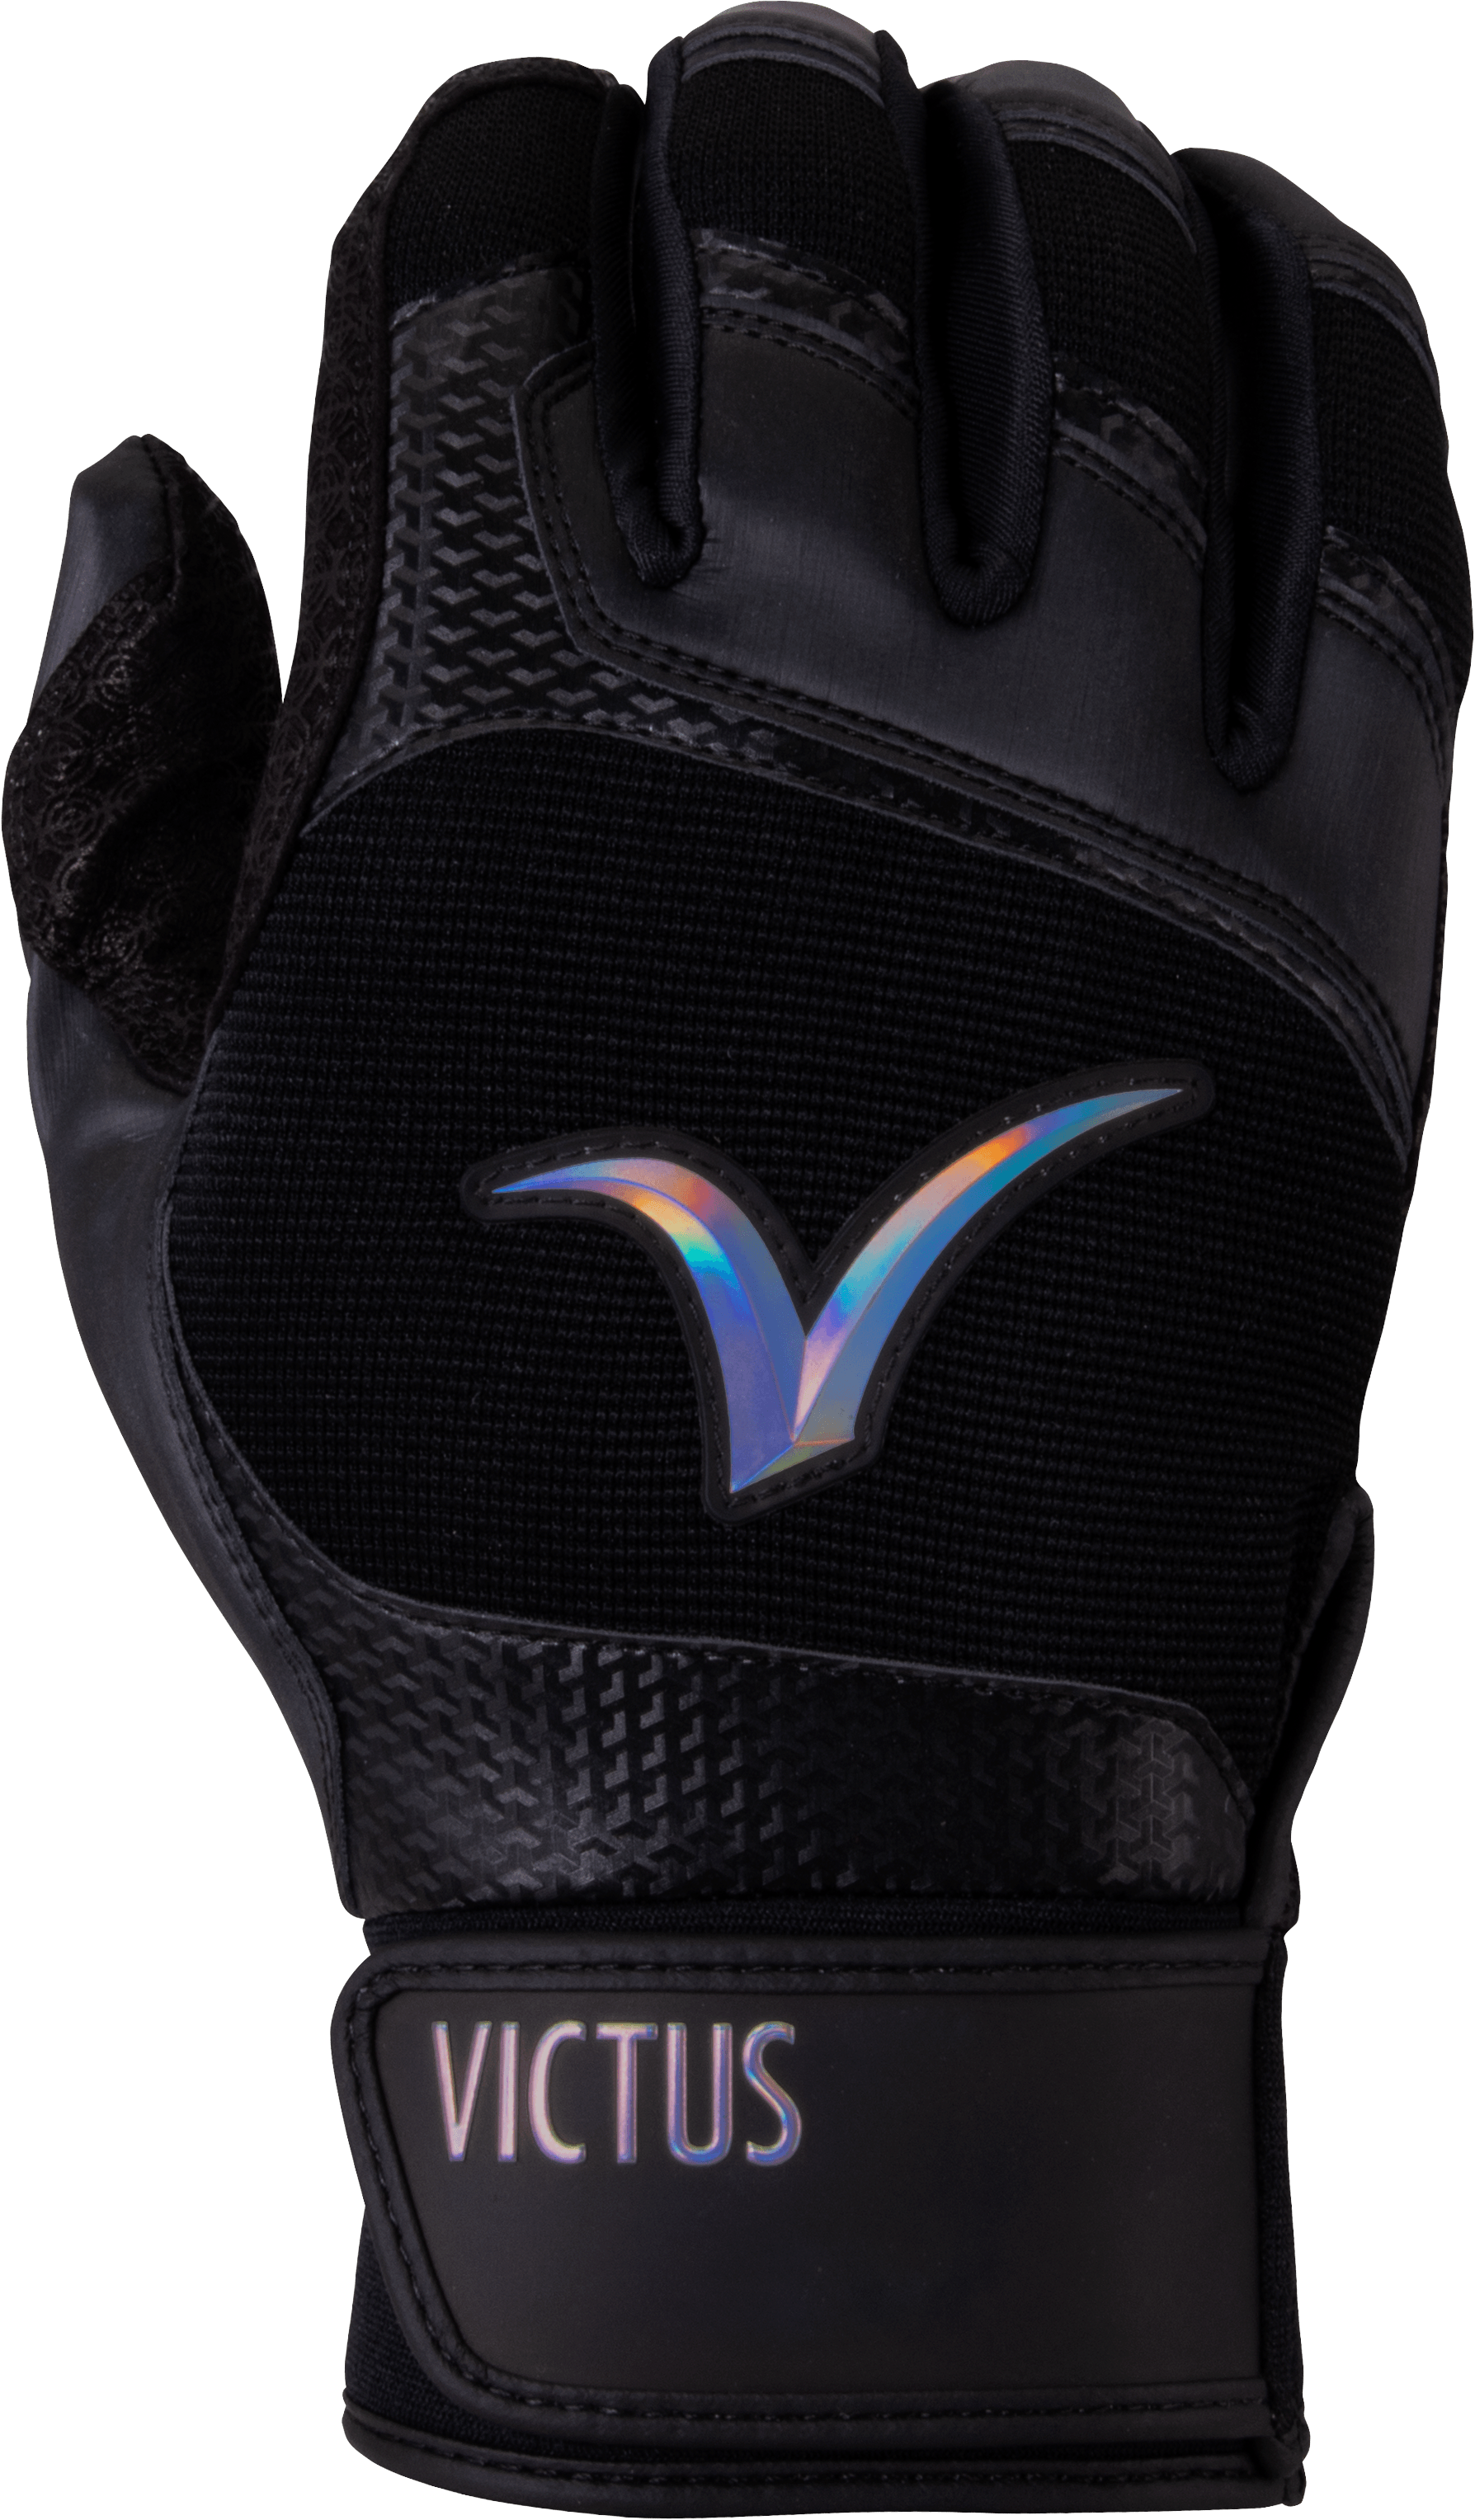 Victus Sports The Debut 2.0 Adult Batting Gloves (Multiple Colors): VBG2